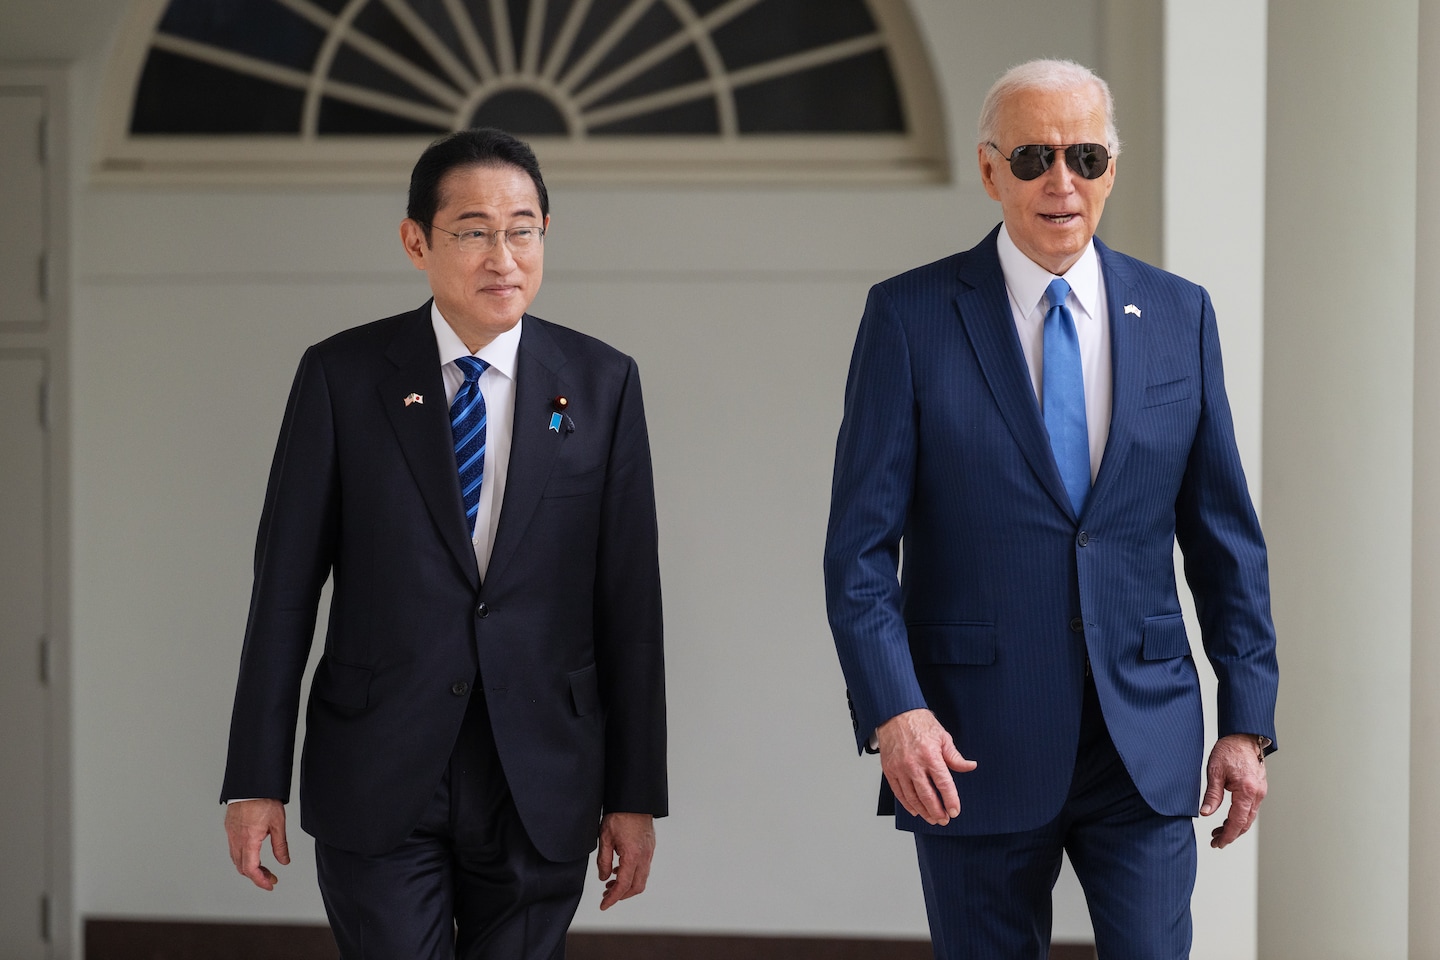 Biden calls ally Japan âxenophobicâ along with China, Russia and India - The Washington Post